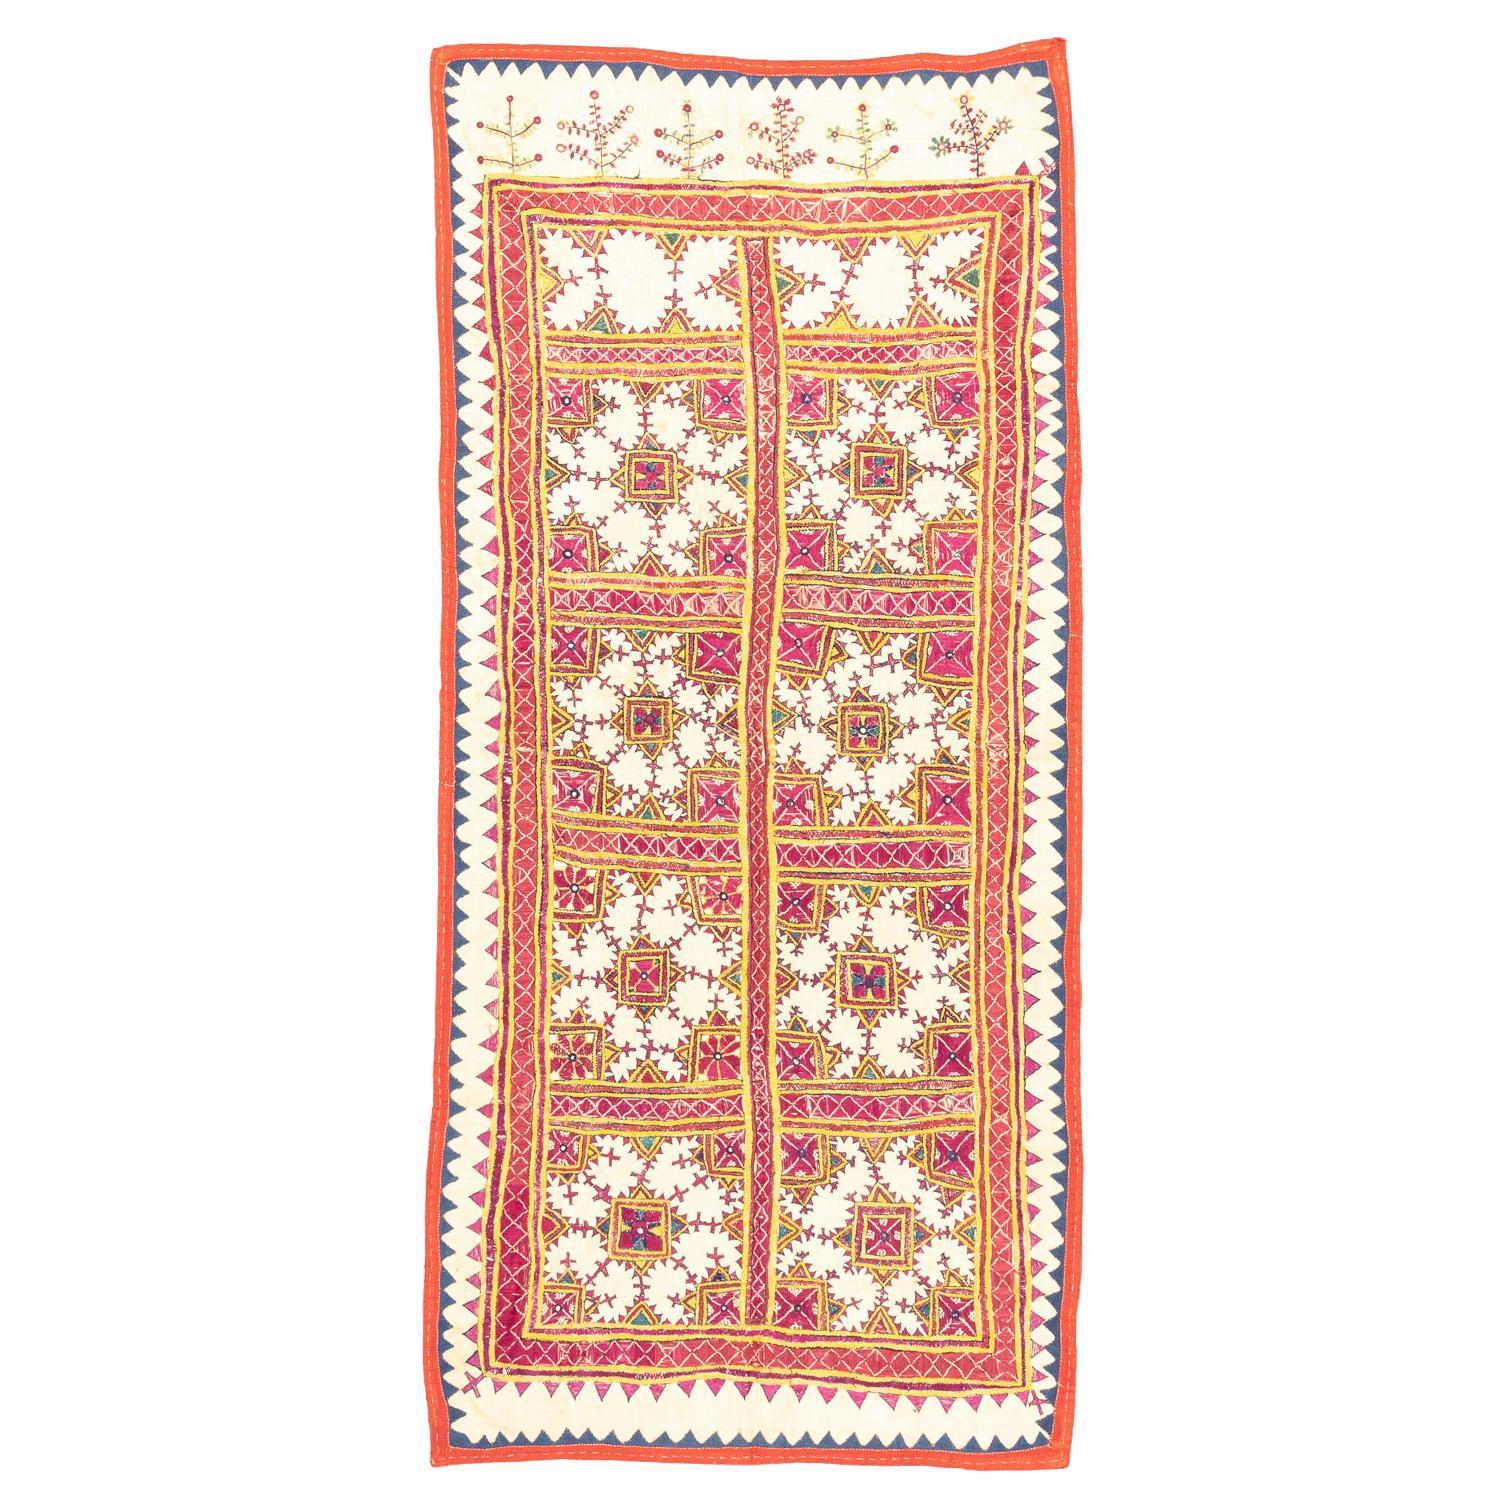 Antike usbekische Stickerei Zickzack-Bordüren-Textilien, 1920-1950